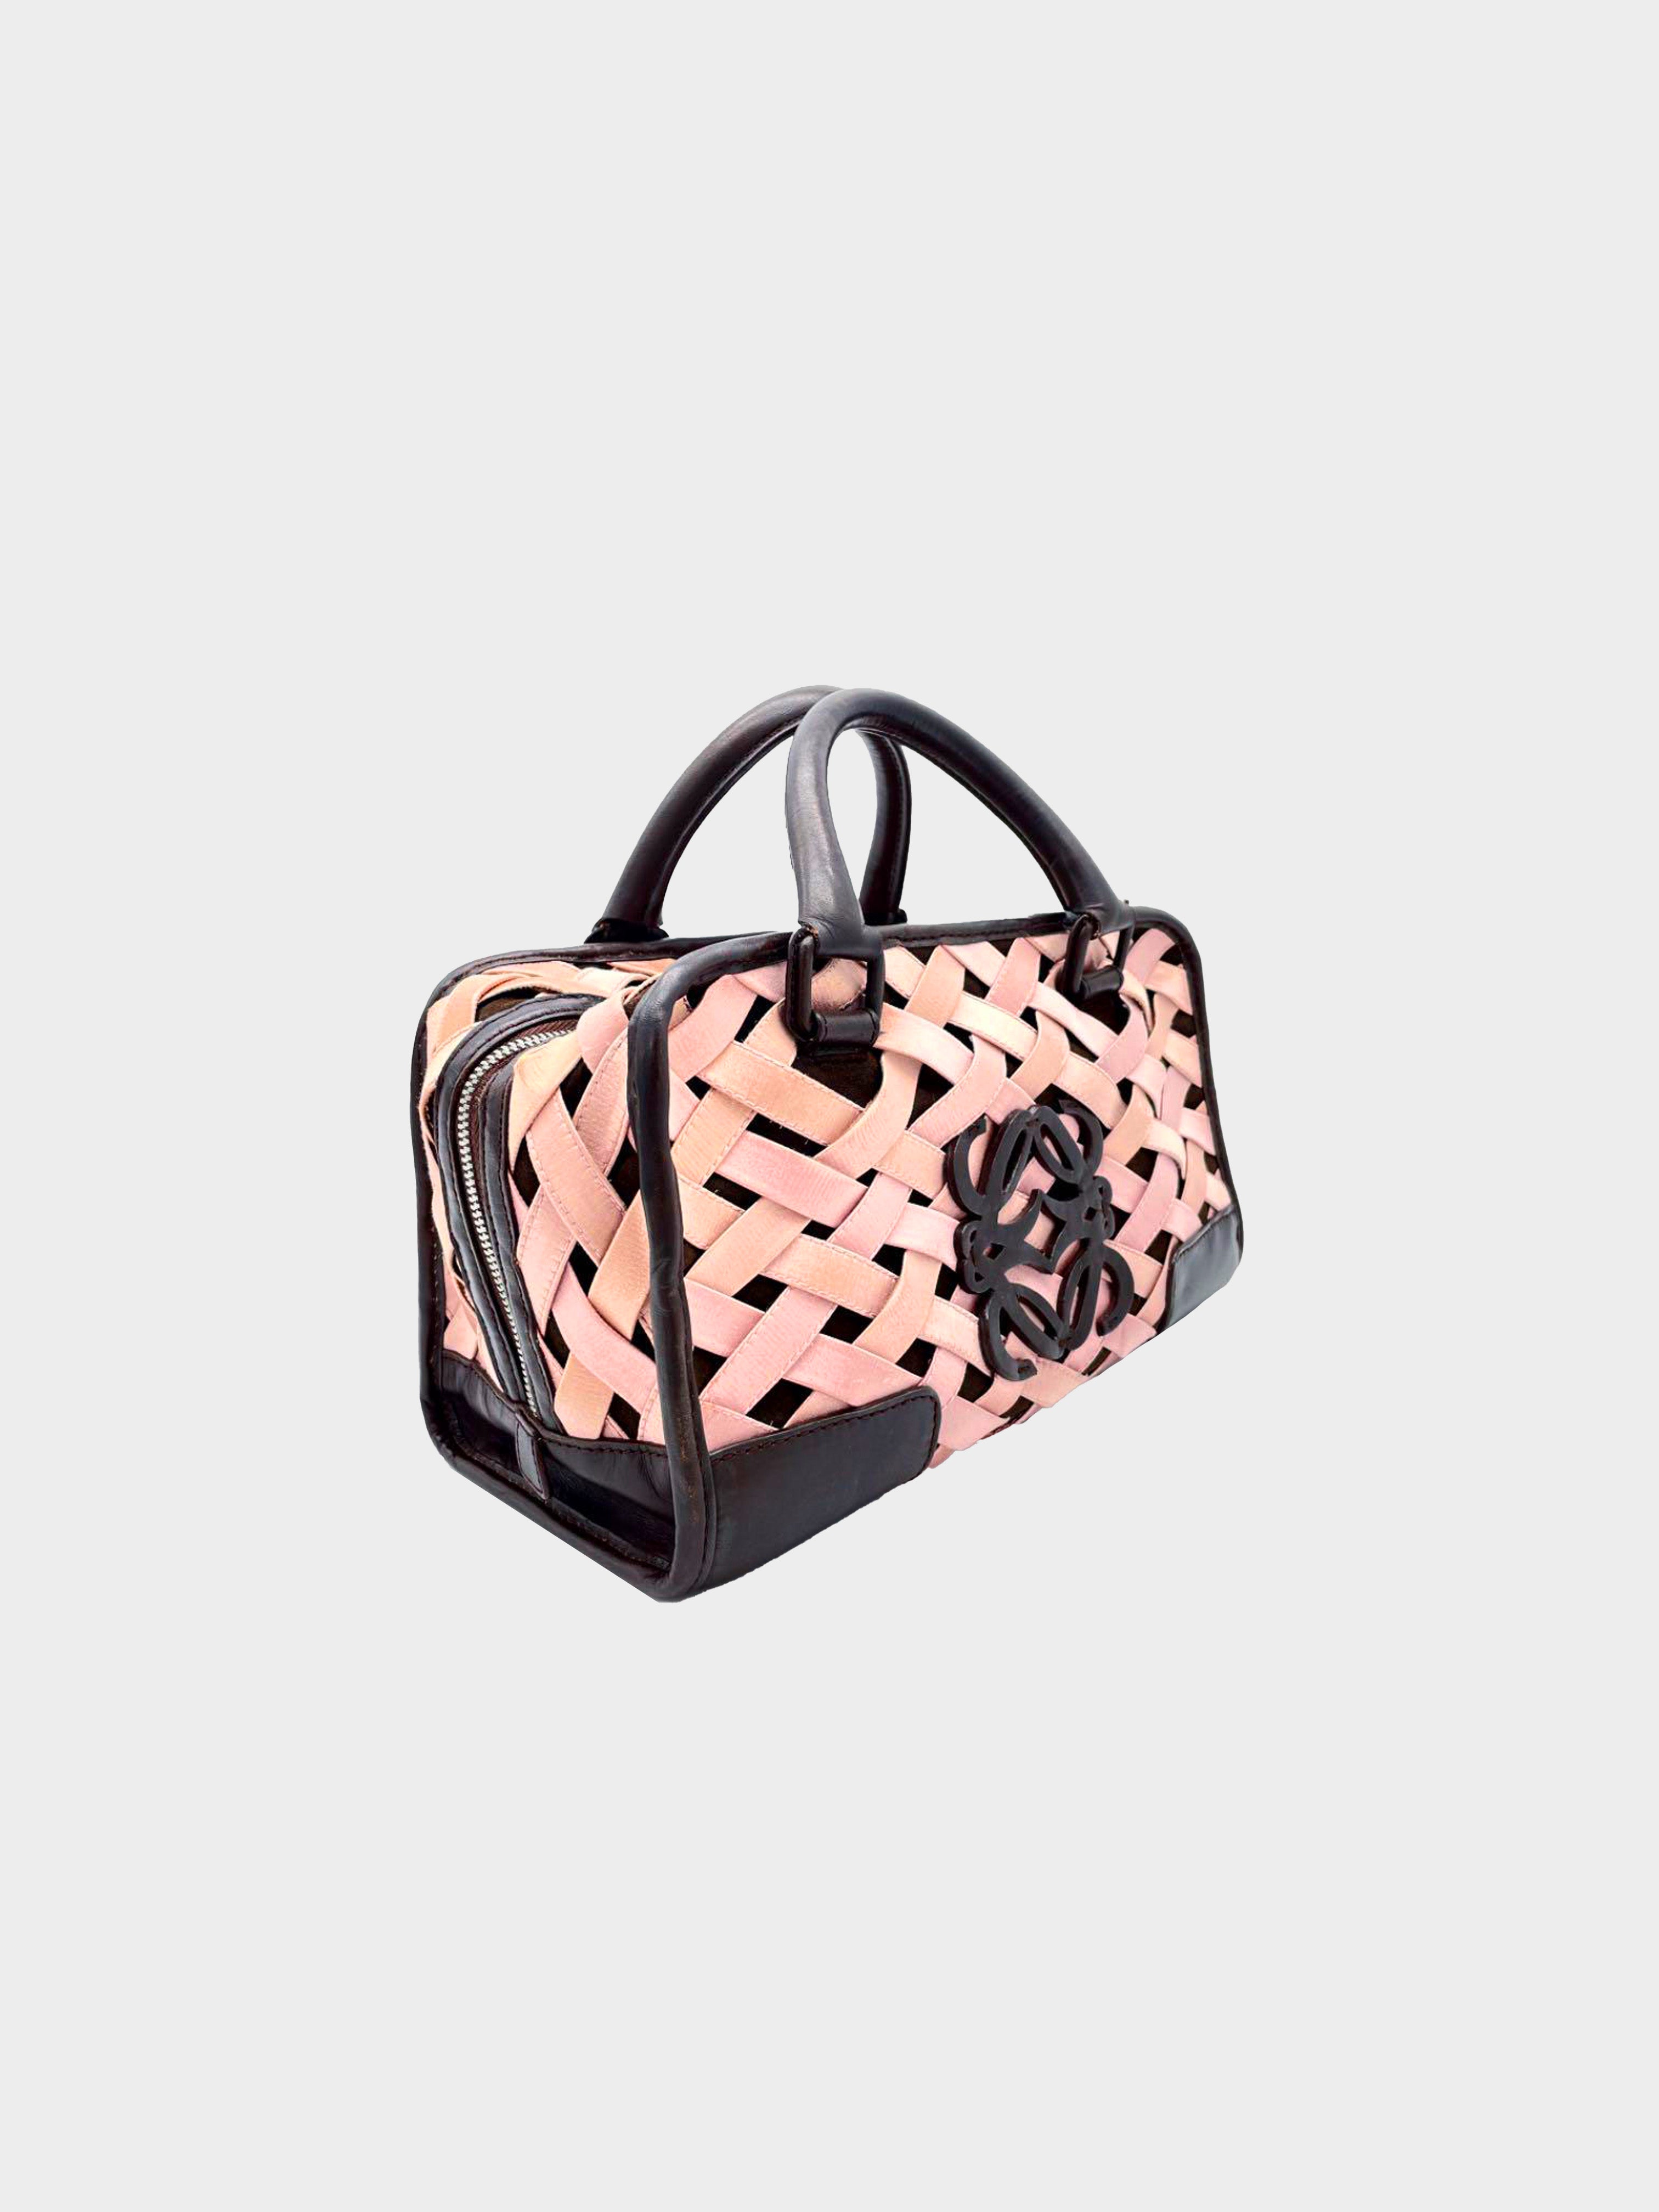 Loewe 2007 Limited Edition Woven Pink Leather Handbag